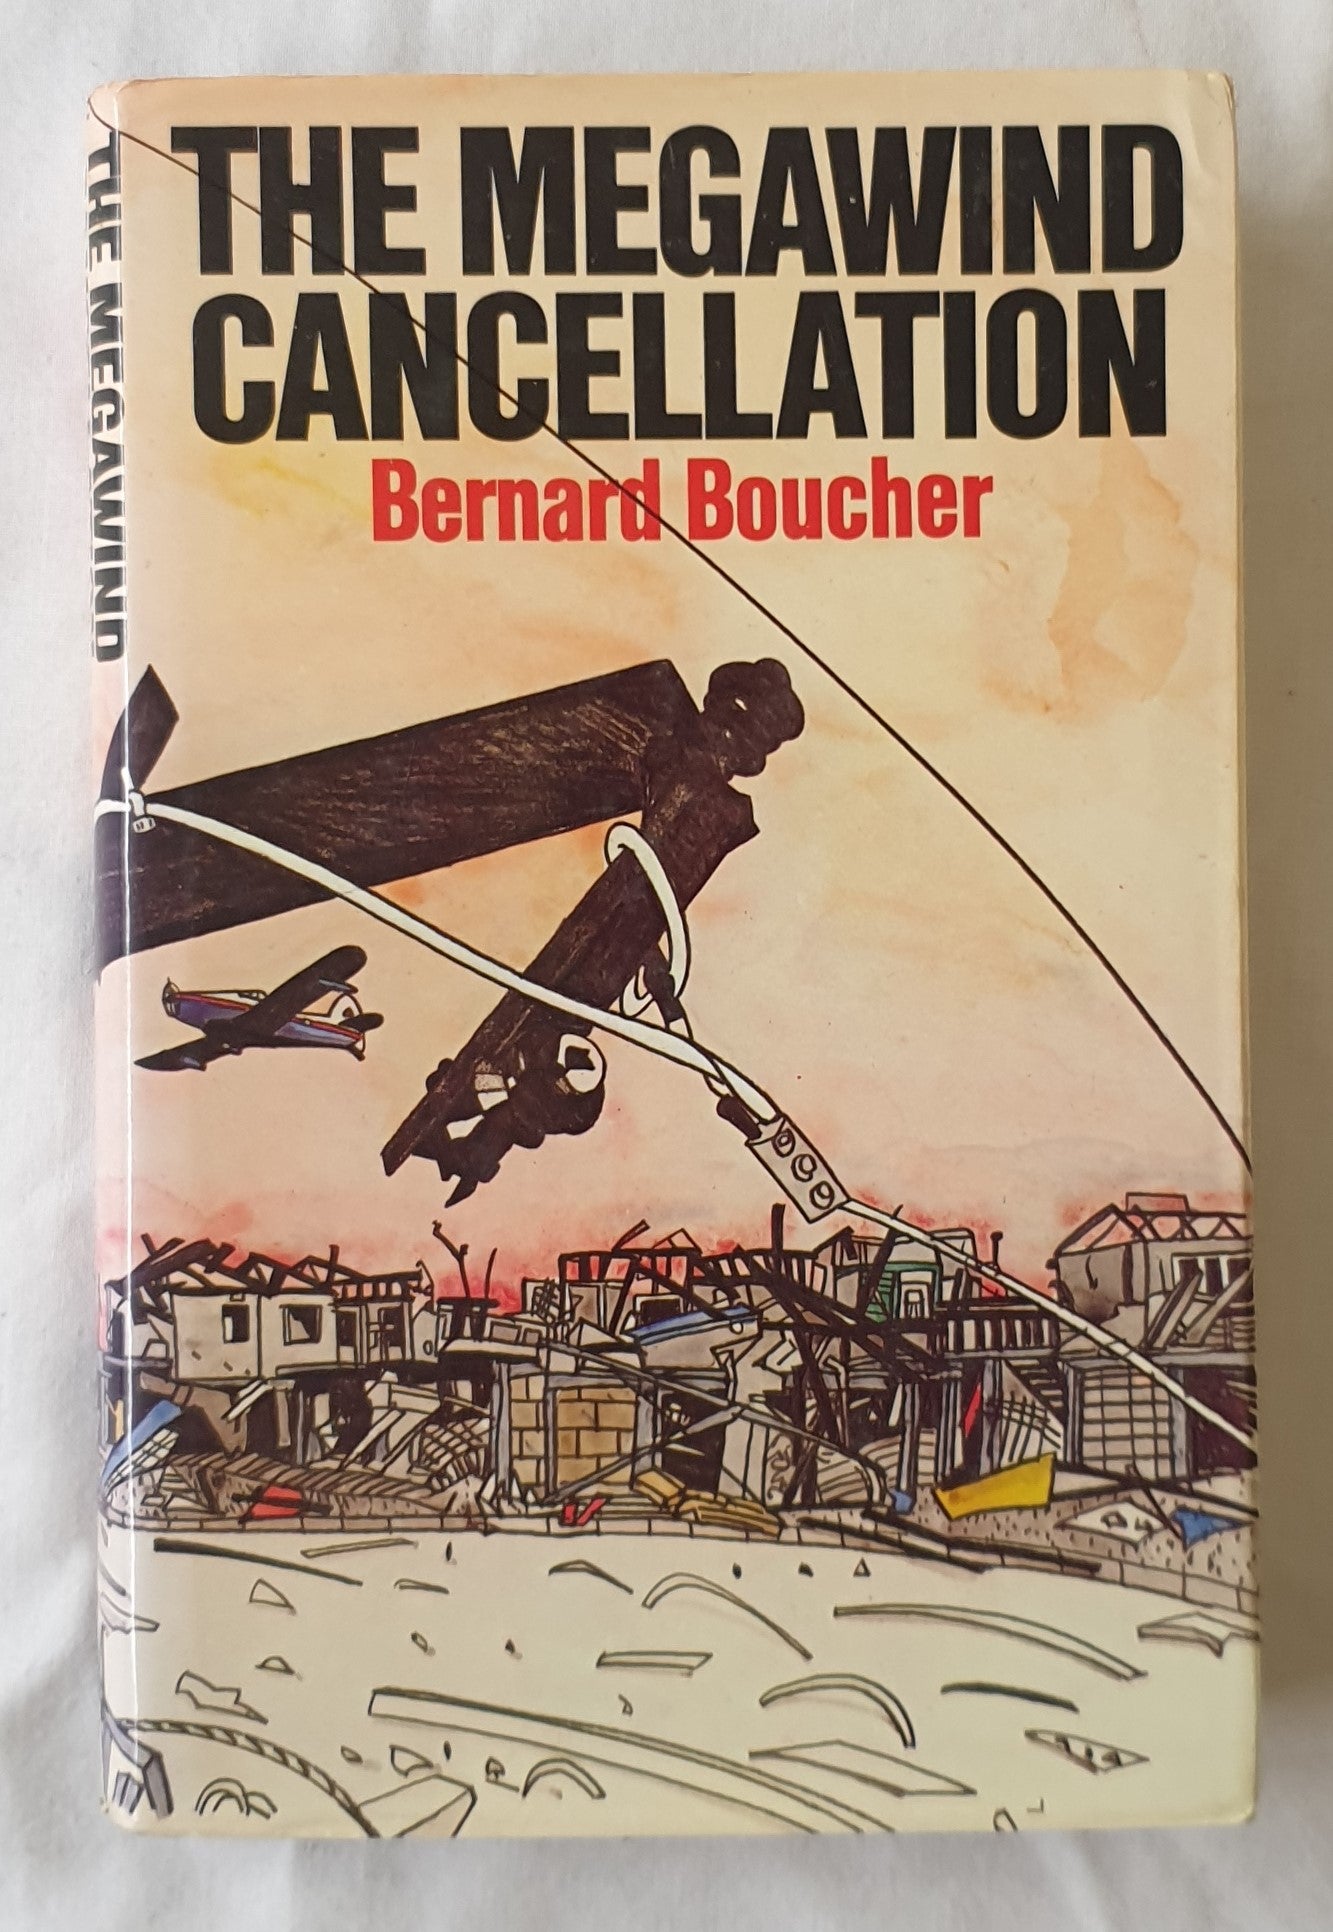 The Megawind Cancellation by Bernard Boucher